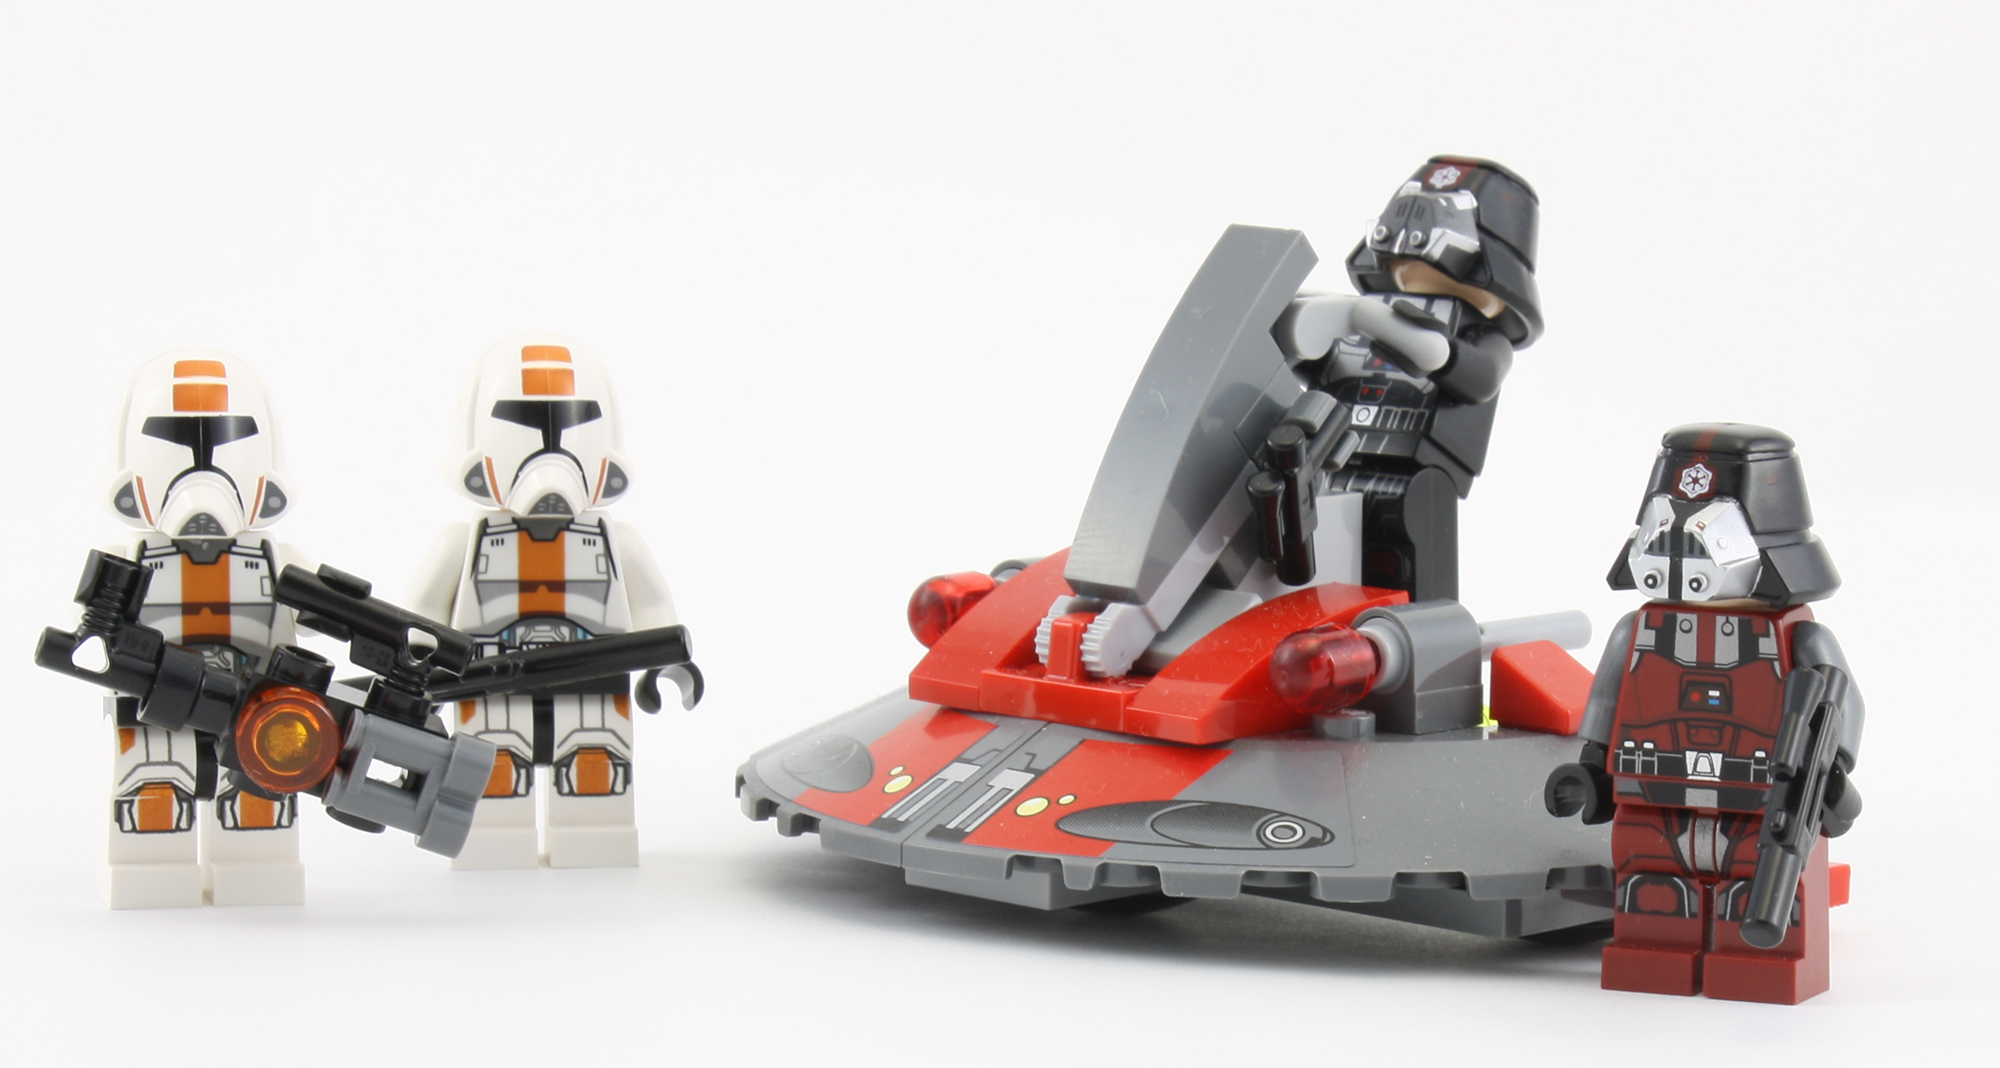 2013 Lego Star Wars Sith Trooper Minifigure